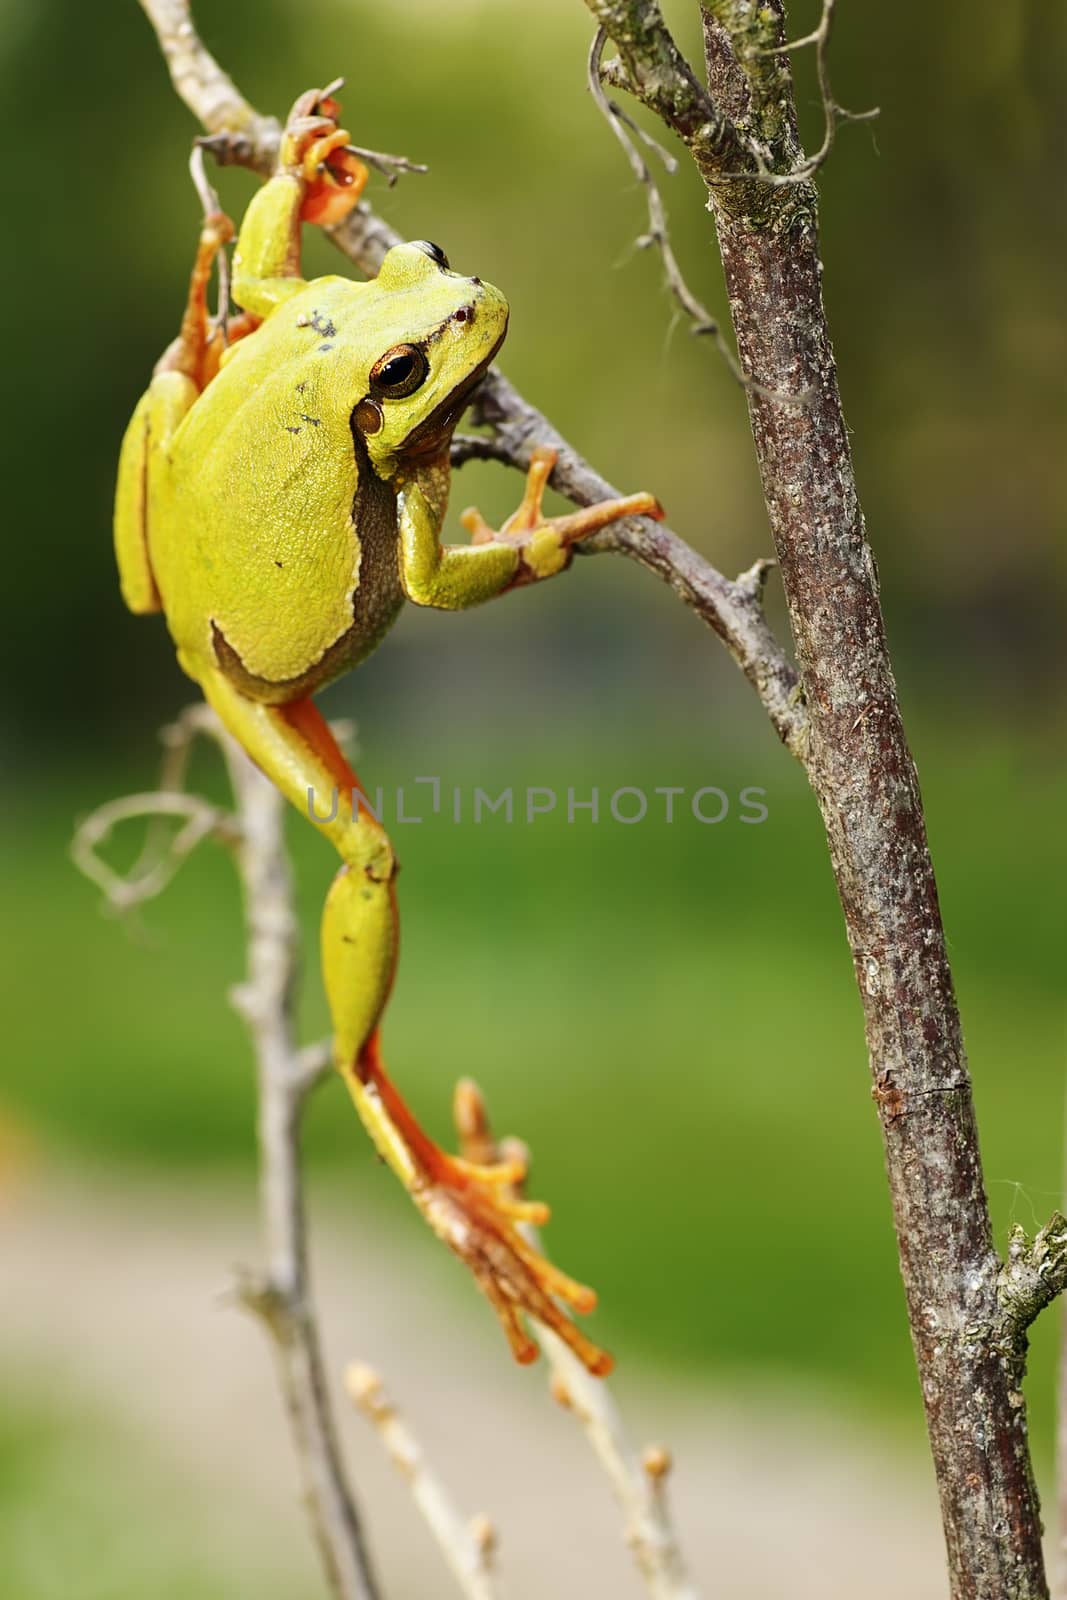 european green tree frog climbing on twigs ( Hyla arborea )